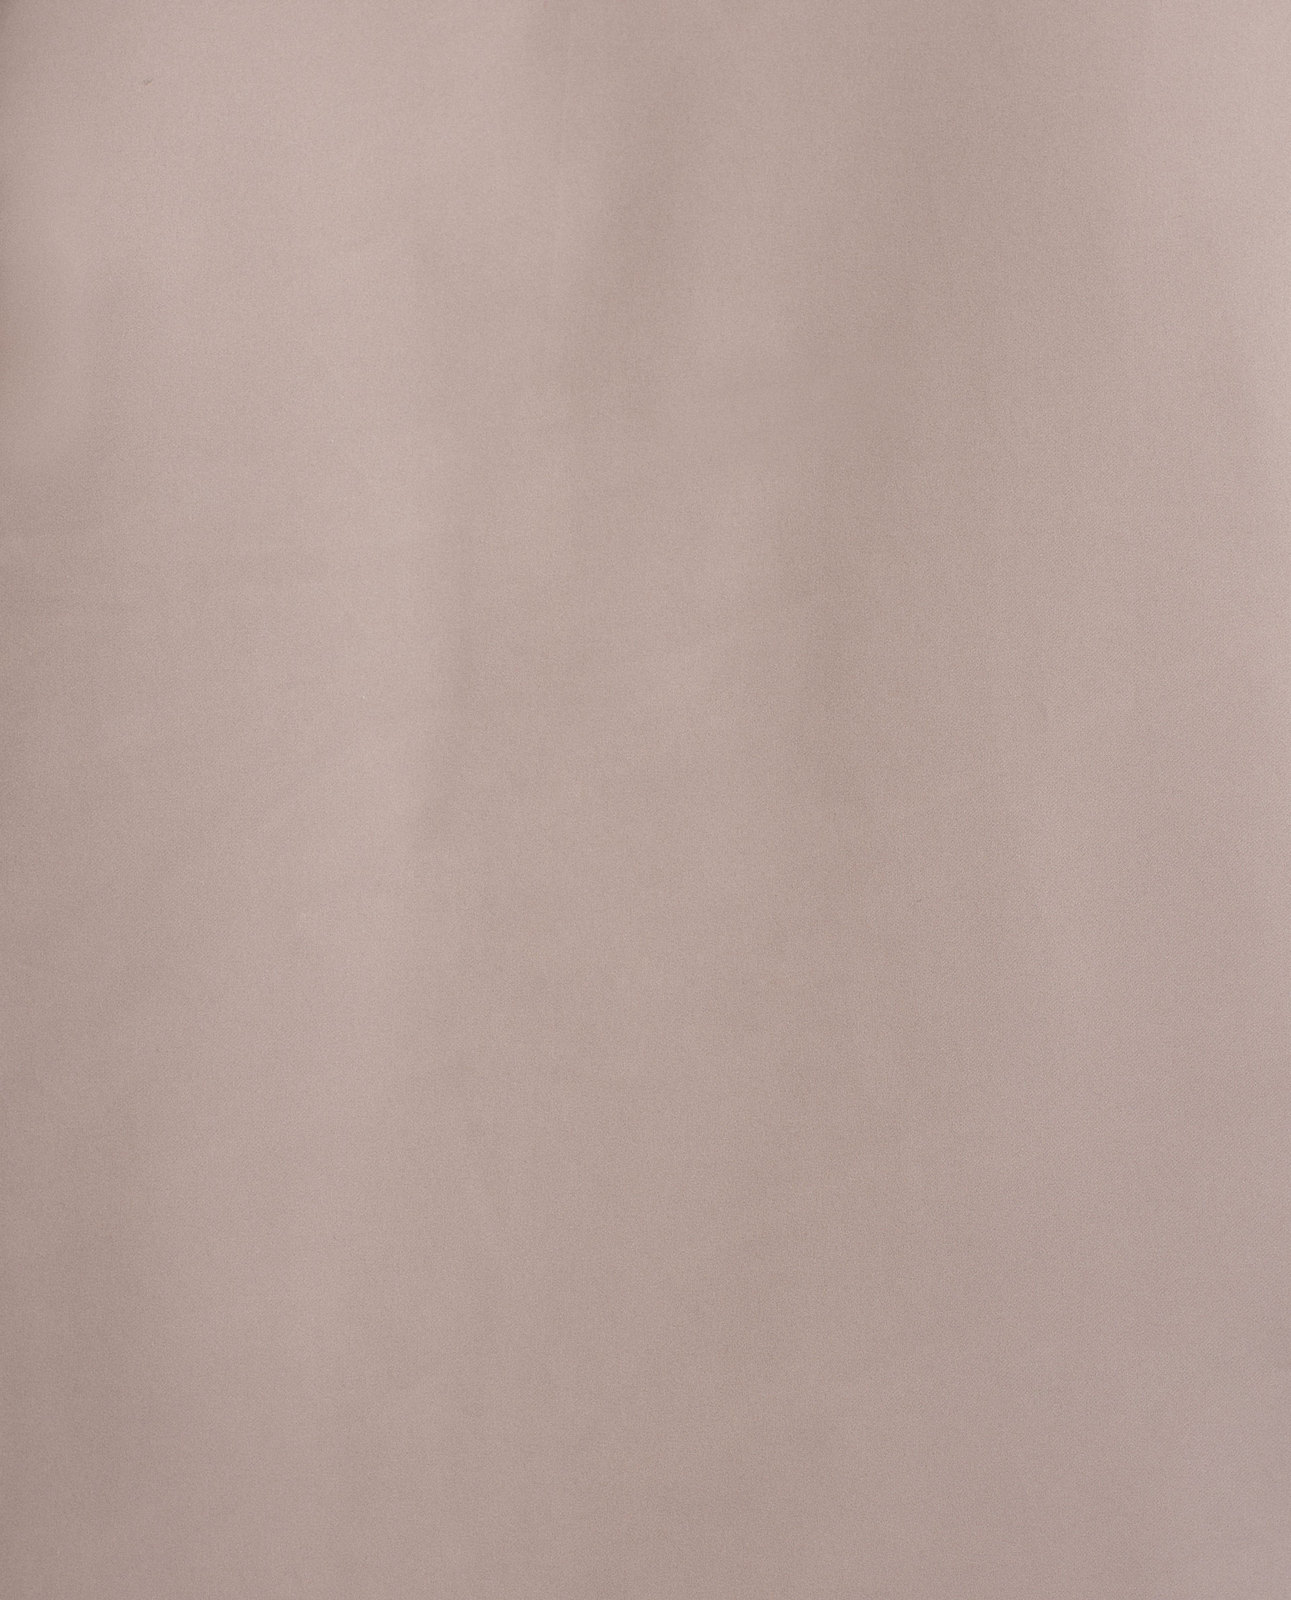 Zara világosbarna kapucnis férfi télikabát 2015.10.15 #89372 fotója